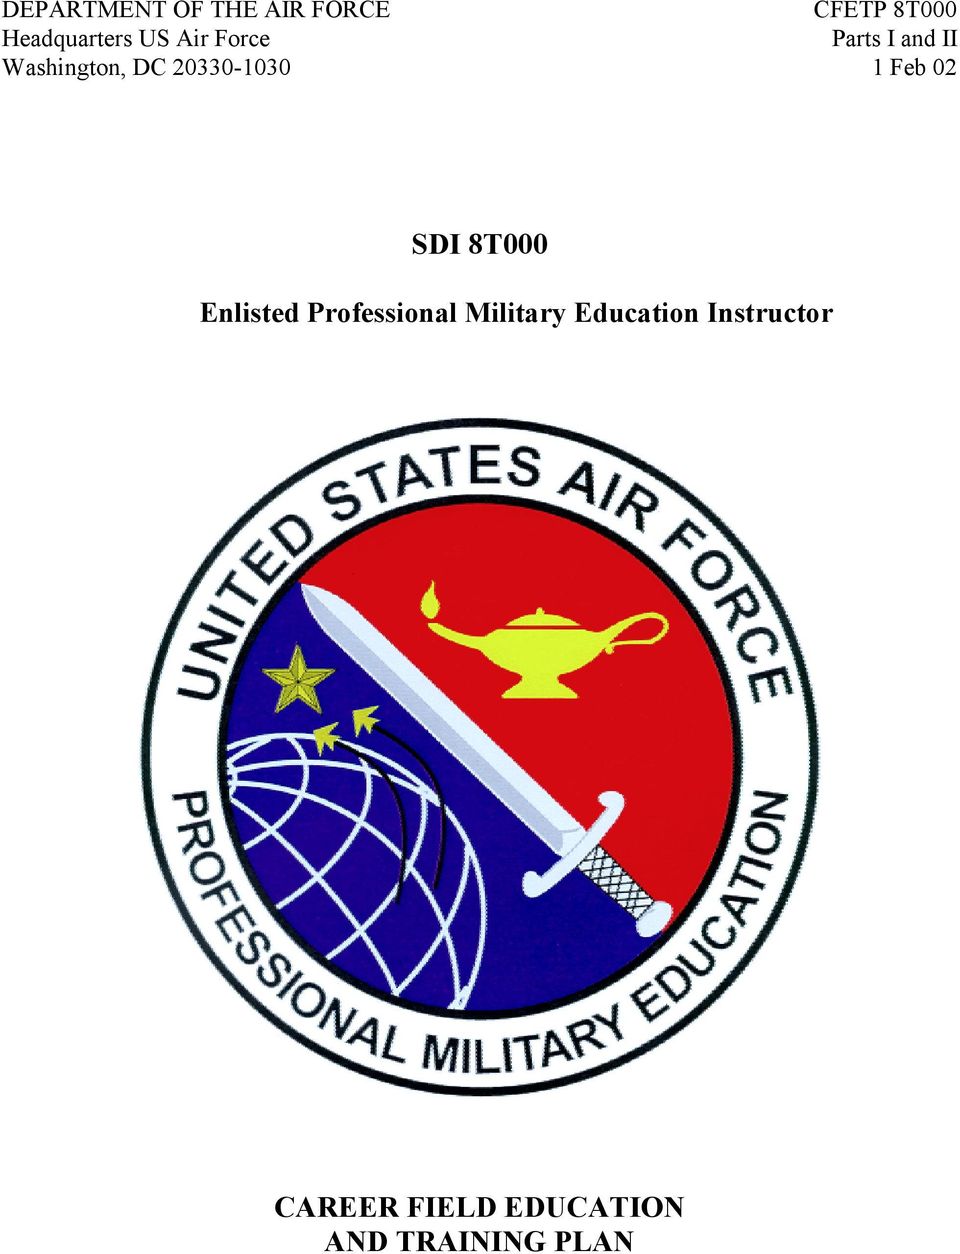 1 Feb 02 SDI 8T000 Enlisted Professional Military